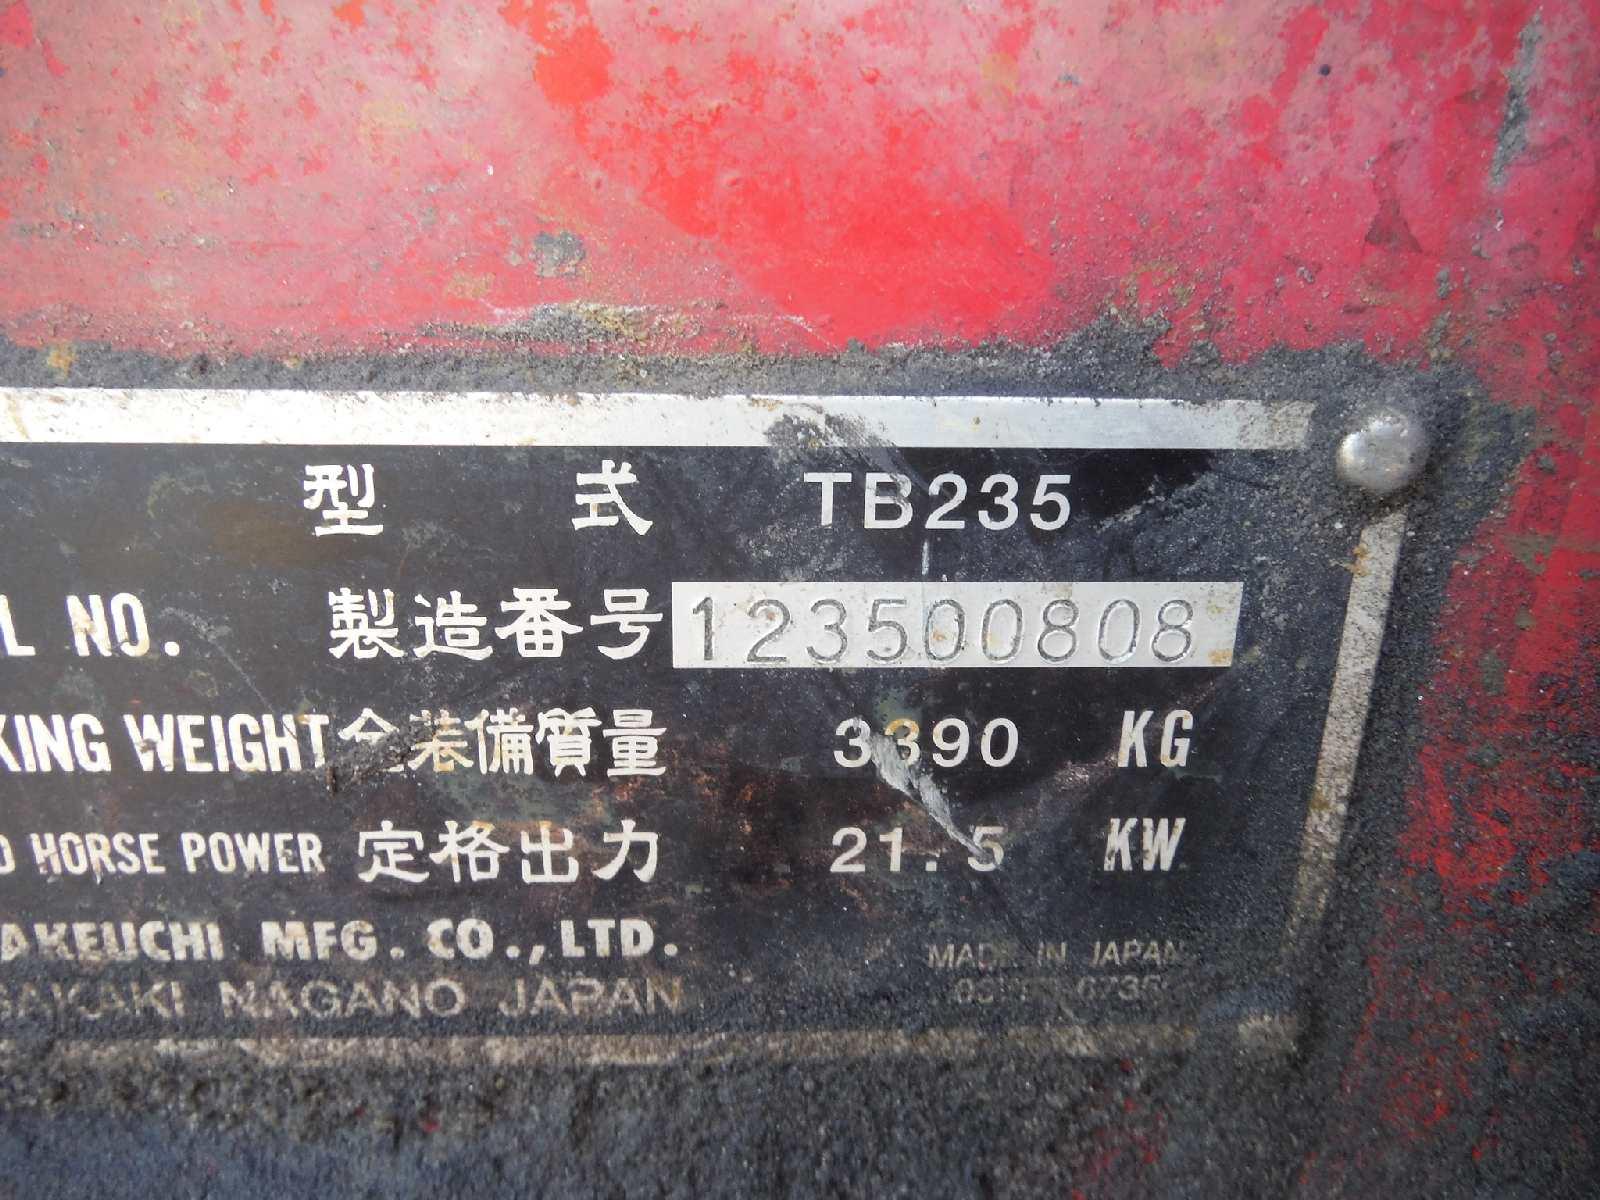 Takeuchi TB235 Mini Excavator, s/n 123500808: Canopy, Blade, Meter Shows 41